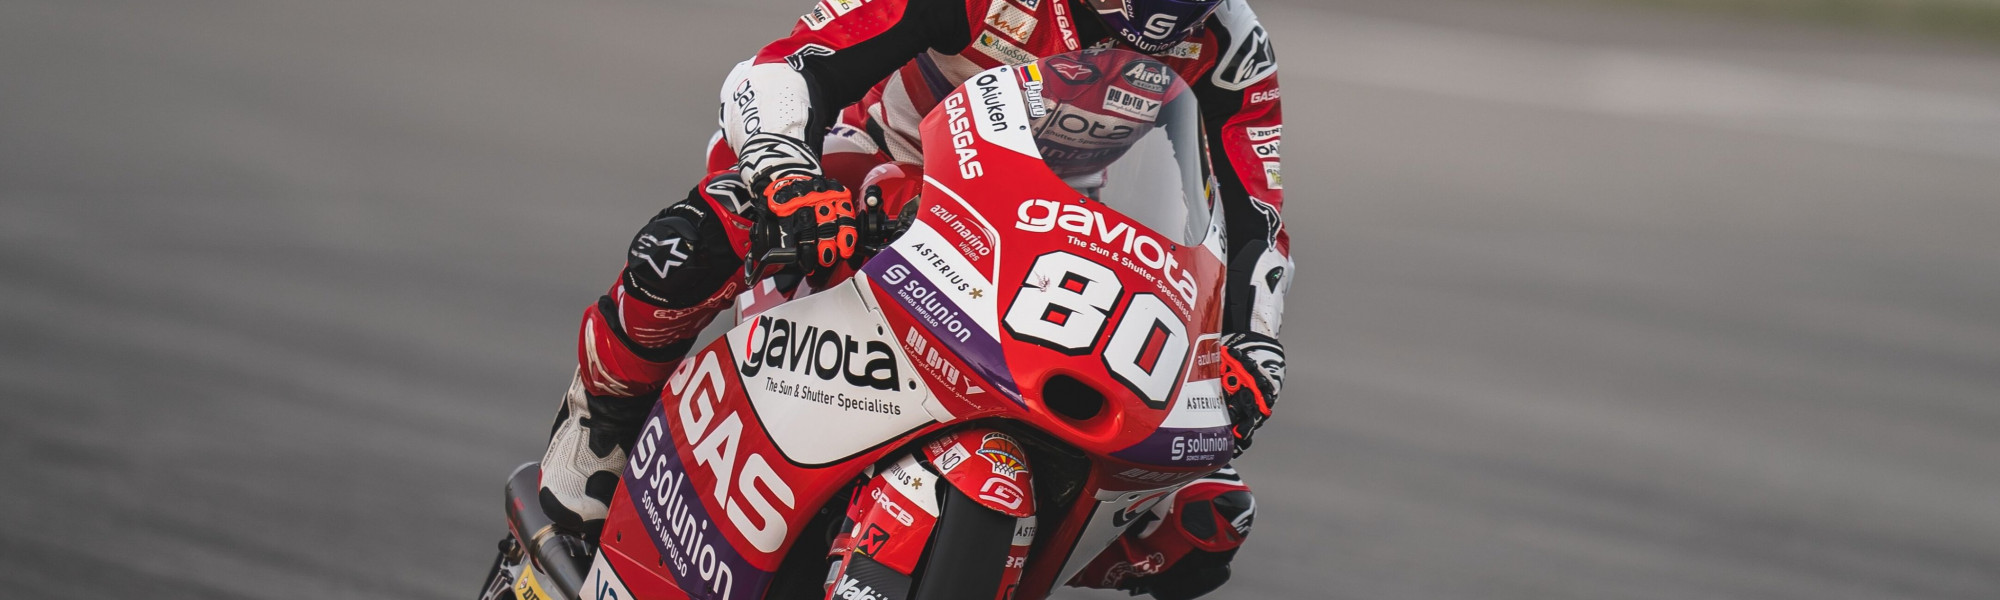 Image Credit: PolarityPhoto (MotoGP photographer)